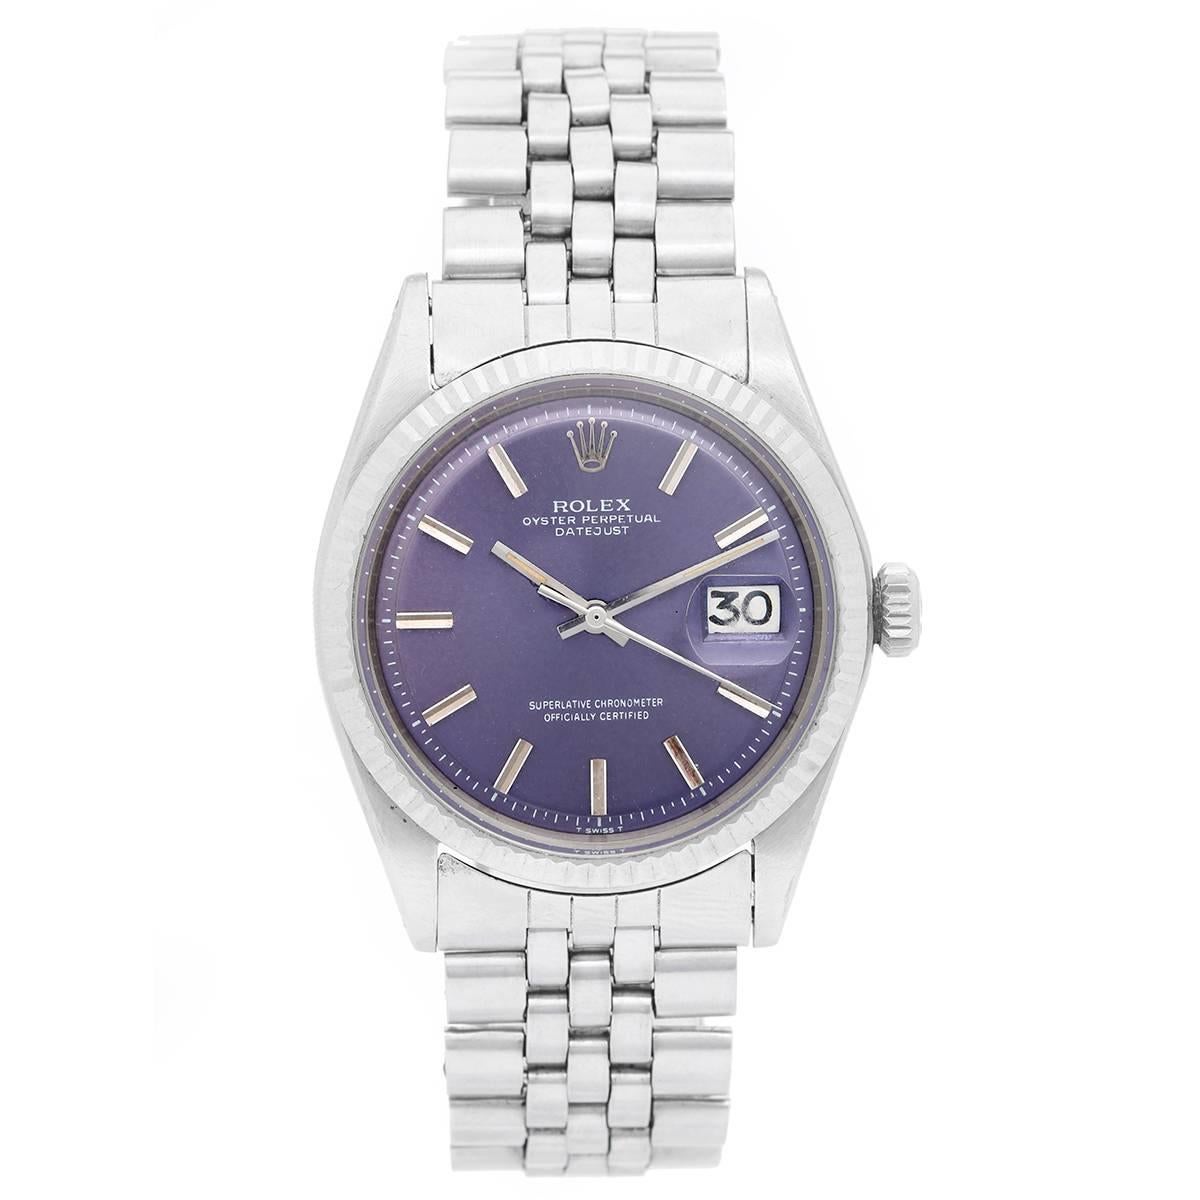 Rolex Stainless Steel Datejust Automatic Wristwatch Ref 1601